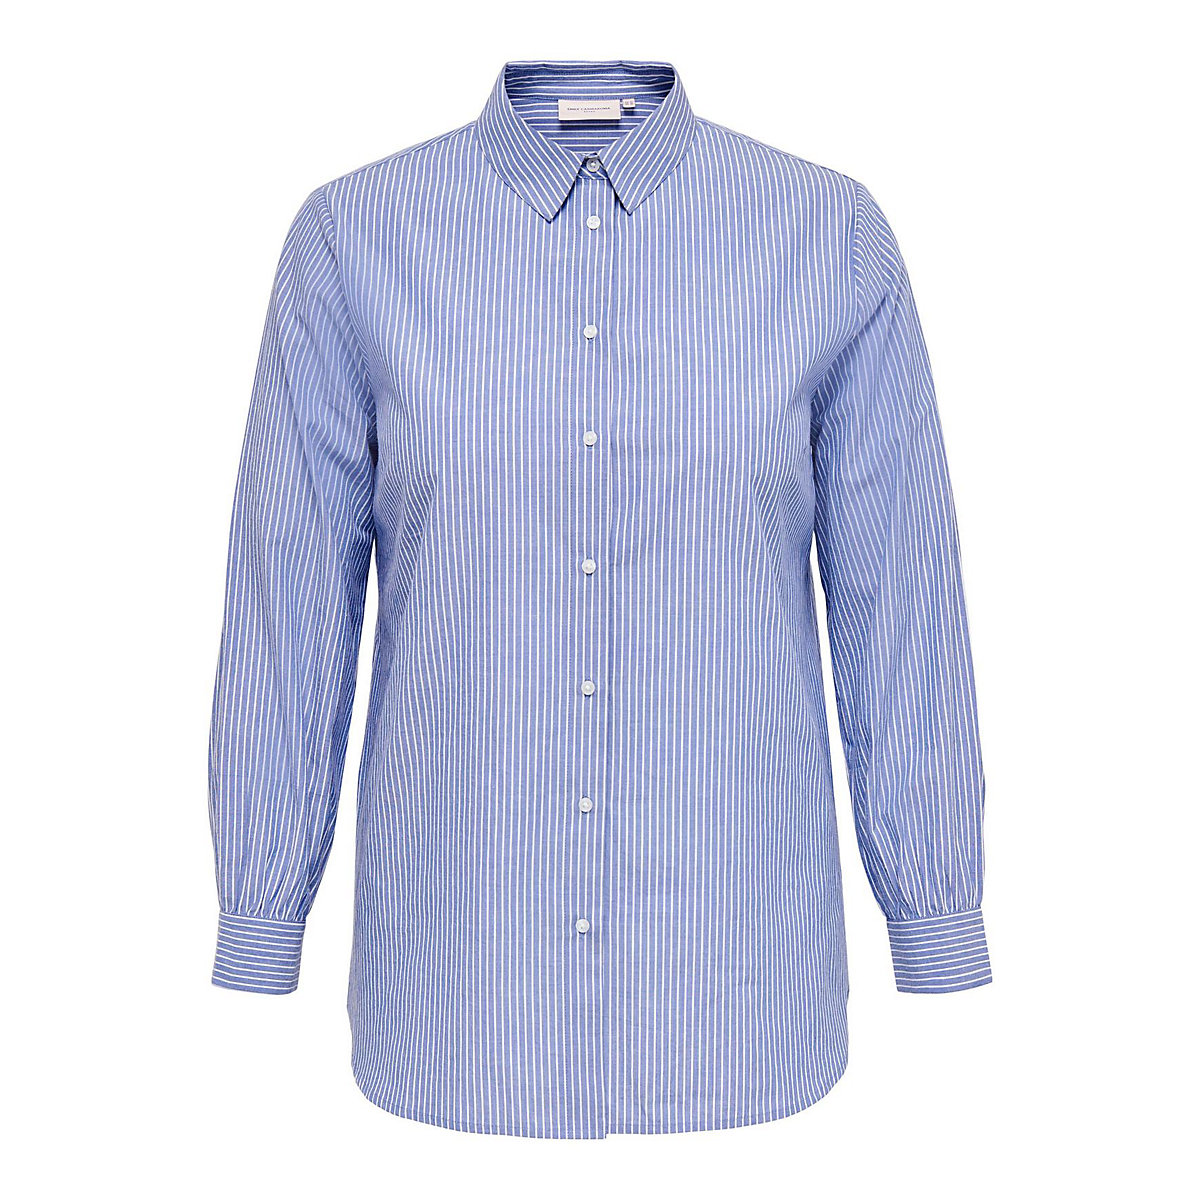 ONLY CARMAKOMA Gestreifte Hemd Bluse Übergrößen Plus Size Shirt CARNORA blau